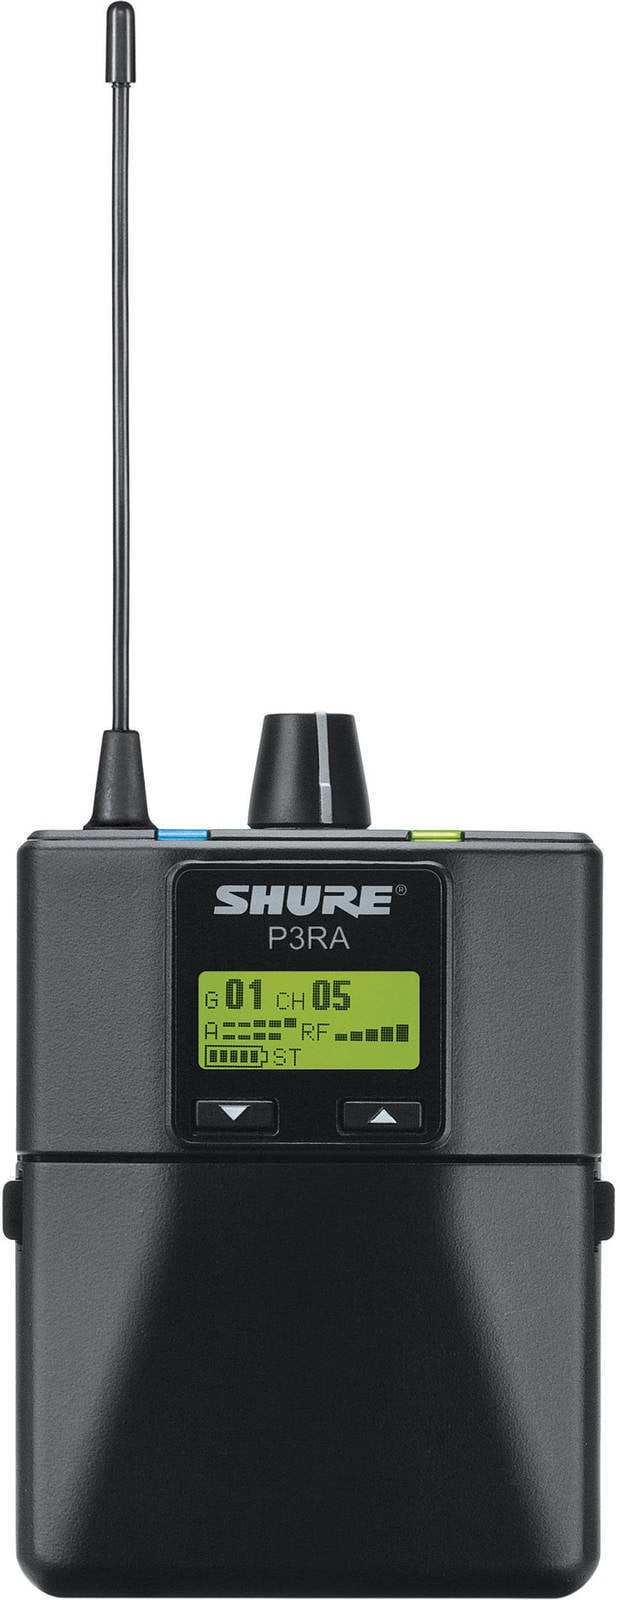 Component voor in-ear systemen Shure P3RA-H20 - PSM 300 Bodypack Receiver H20: 518–542 MHz